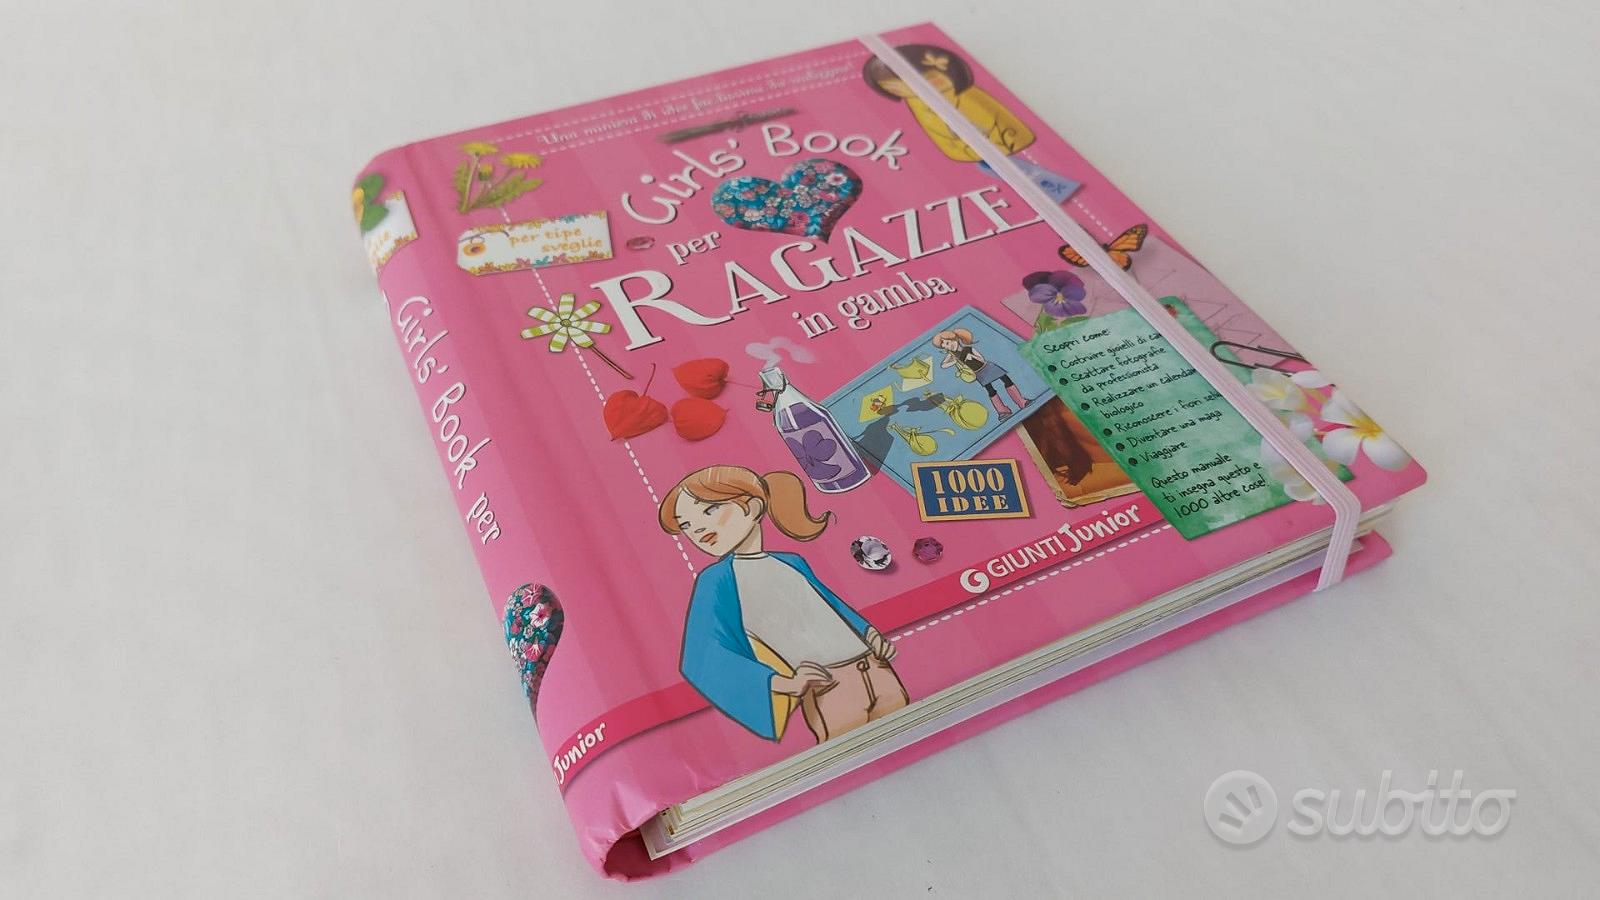 Girls' Book per Ragazze in gamba - Libri e Riviste In vendita a Milano